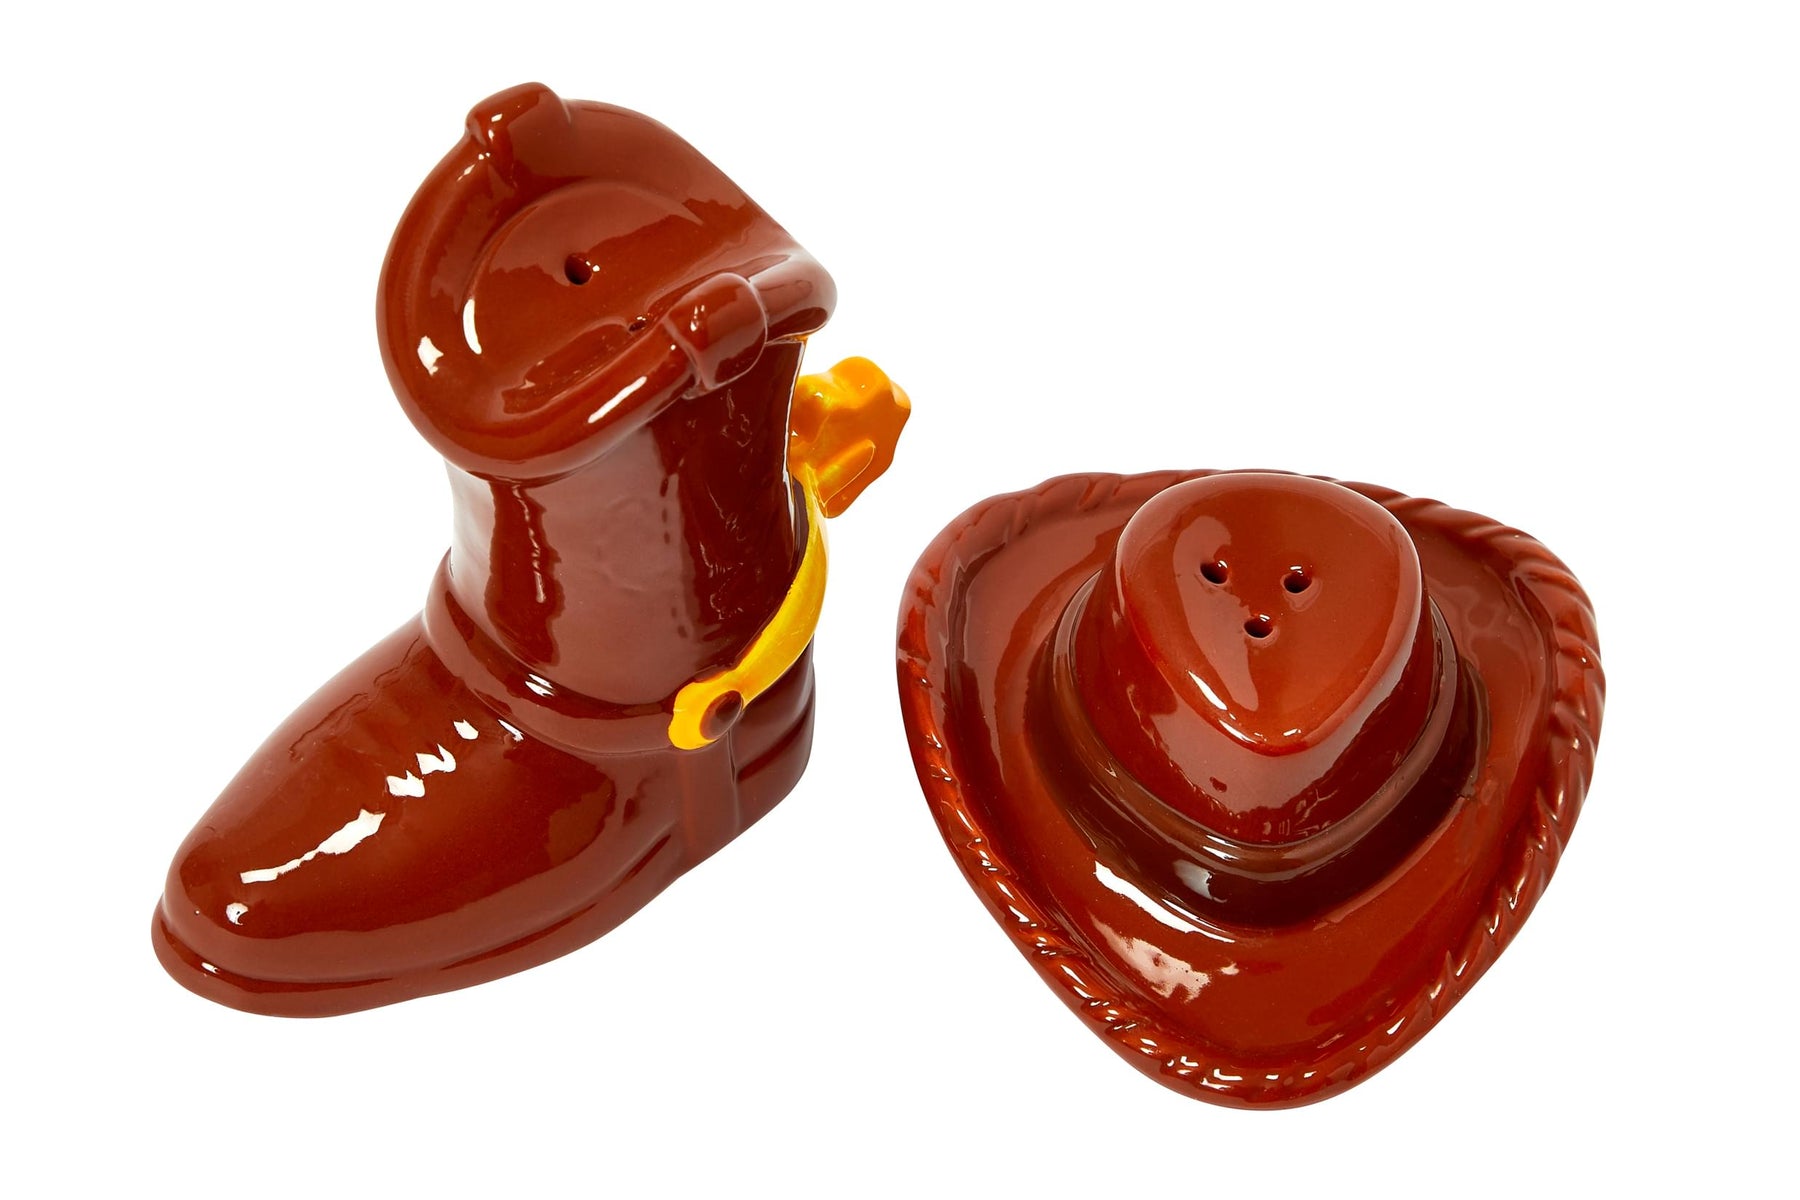 Disney & Pixar Toy Story 4 Woody Themed Salt & Pepper Shakers | Ceramic Set